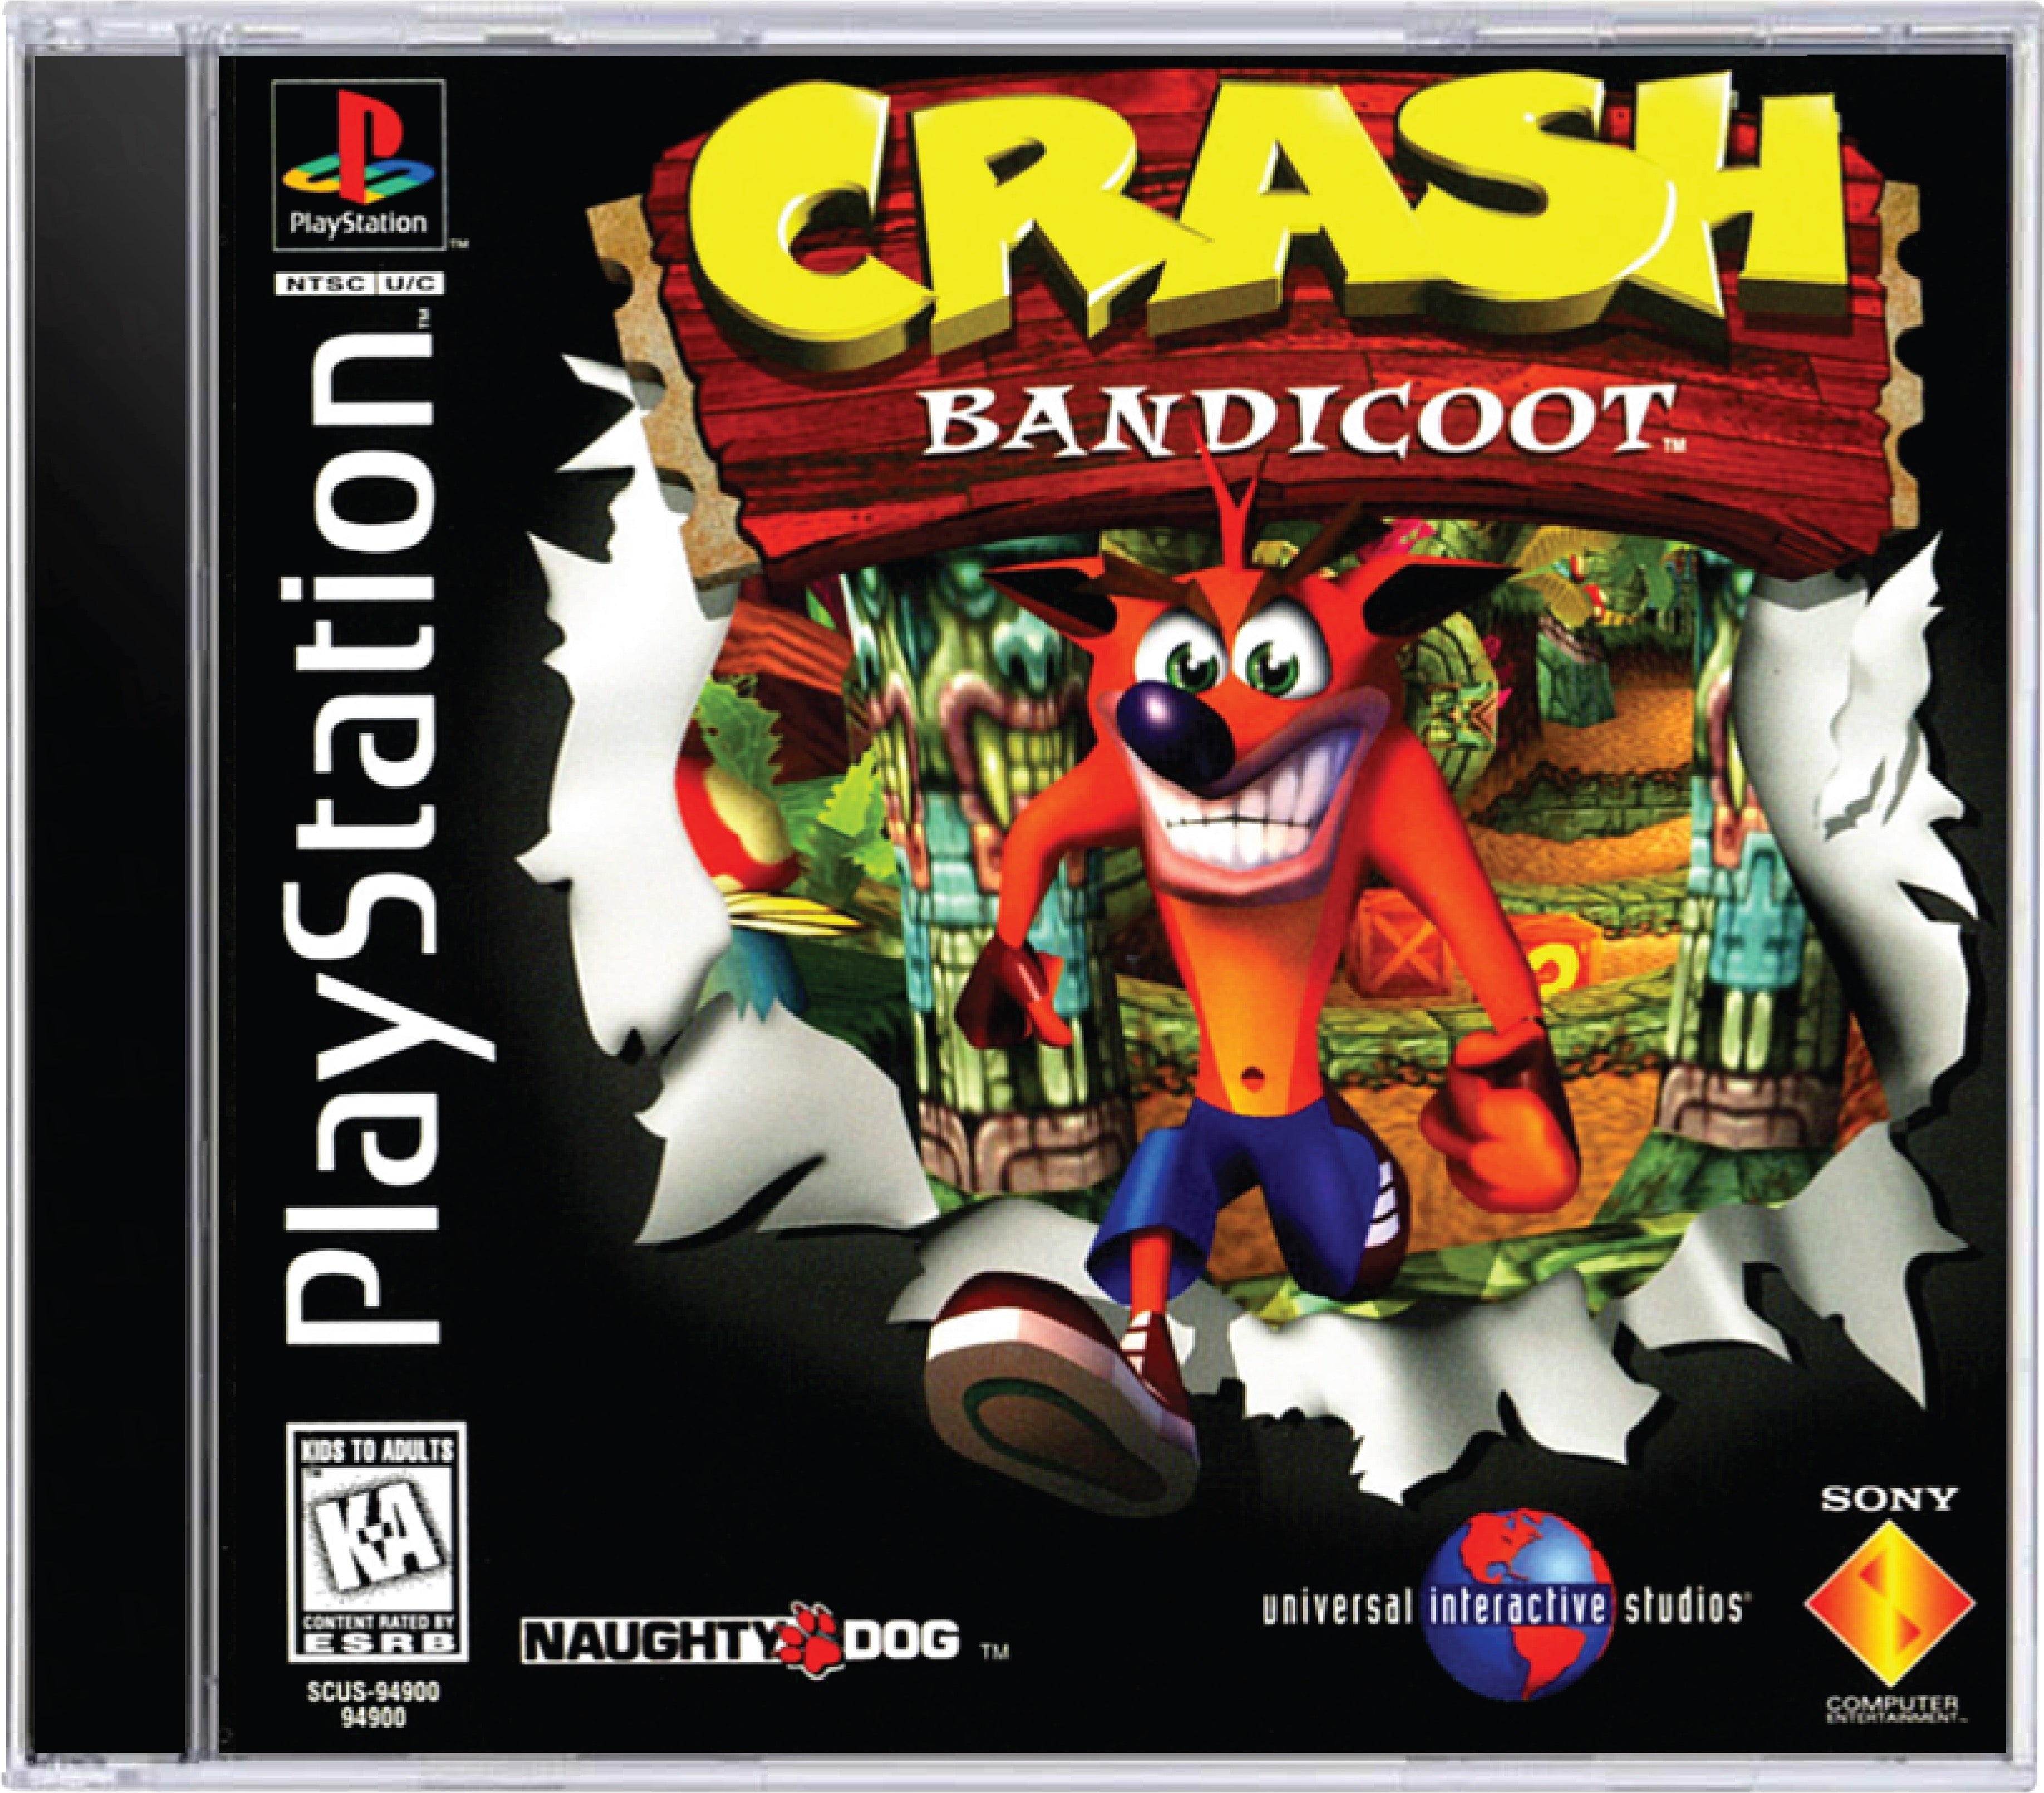 Crash Bandicoot Cover Art and Product Photo